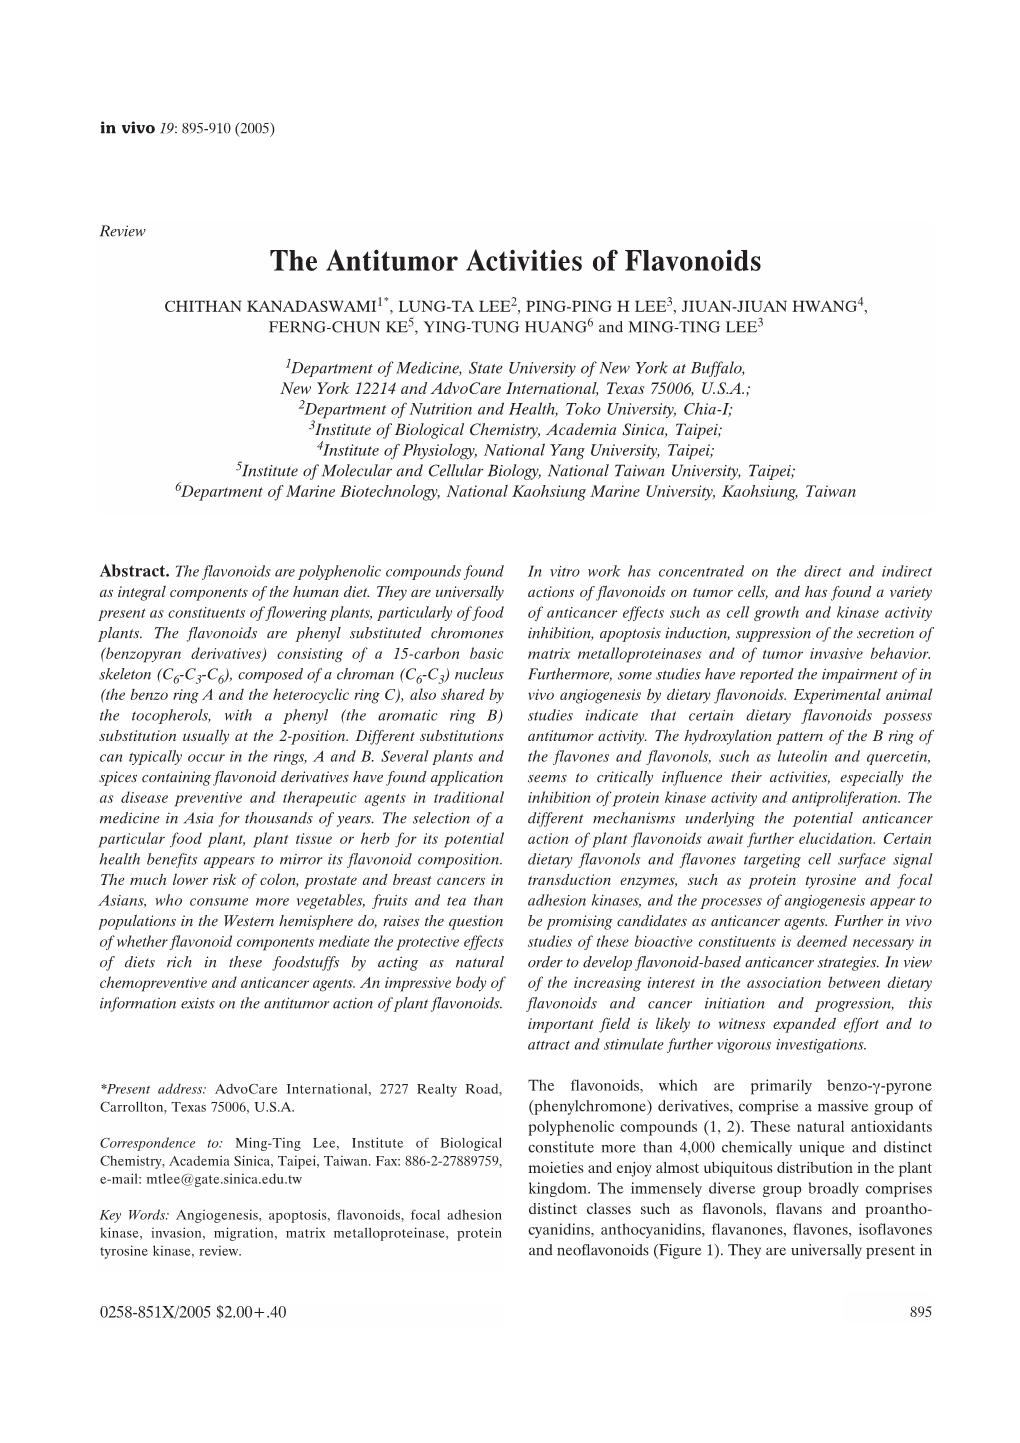 The Antitumor Activities of Flavonoids